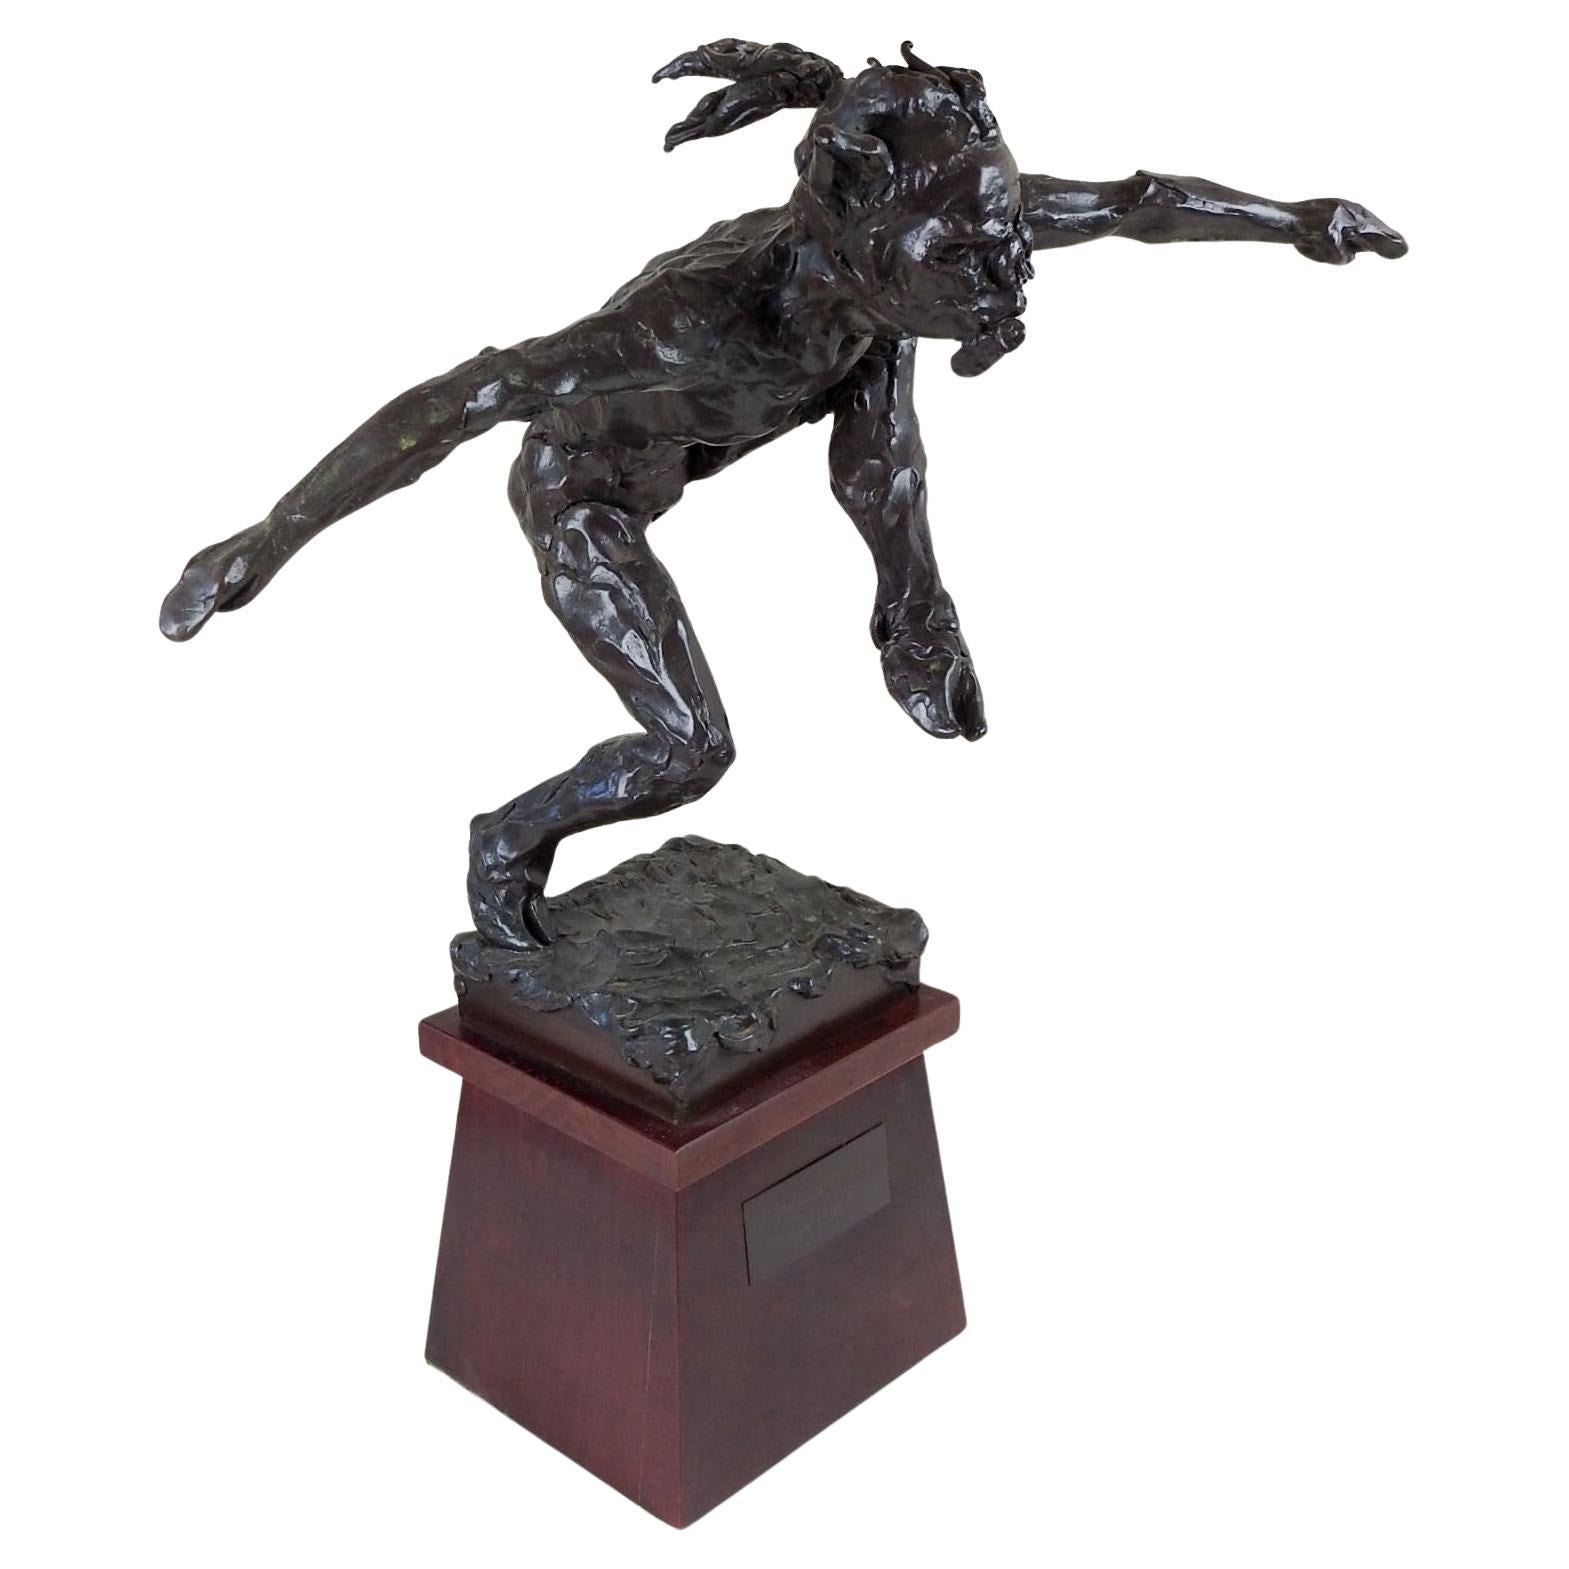 Vintage 1996 Mythical Dancing Creature Bronze Sculpture